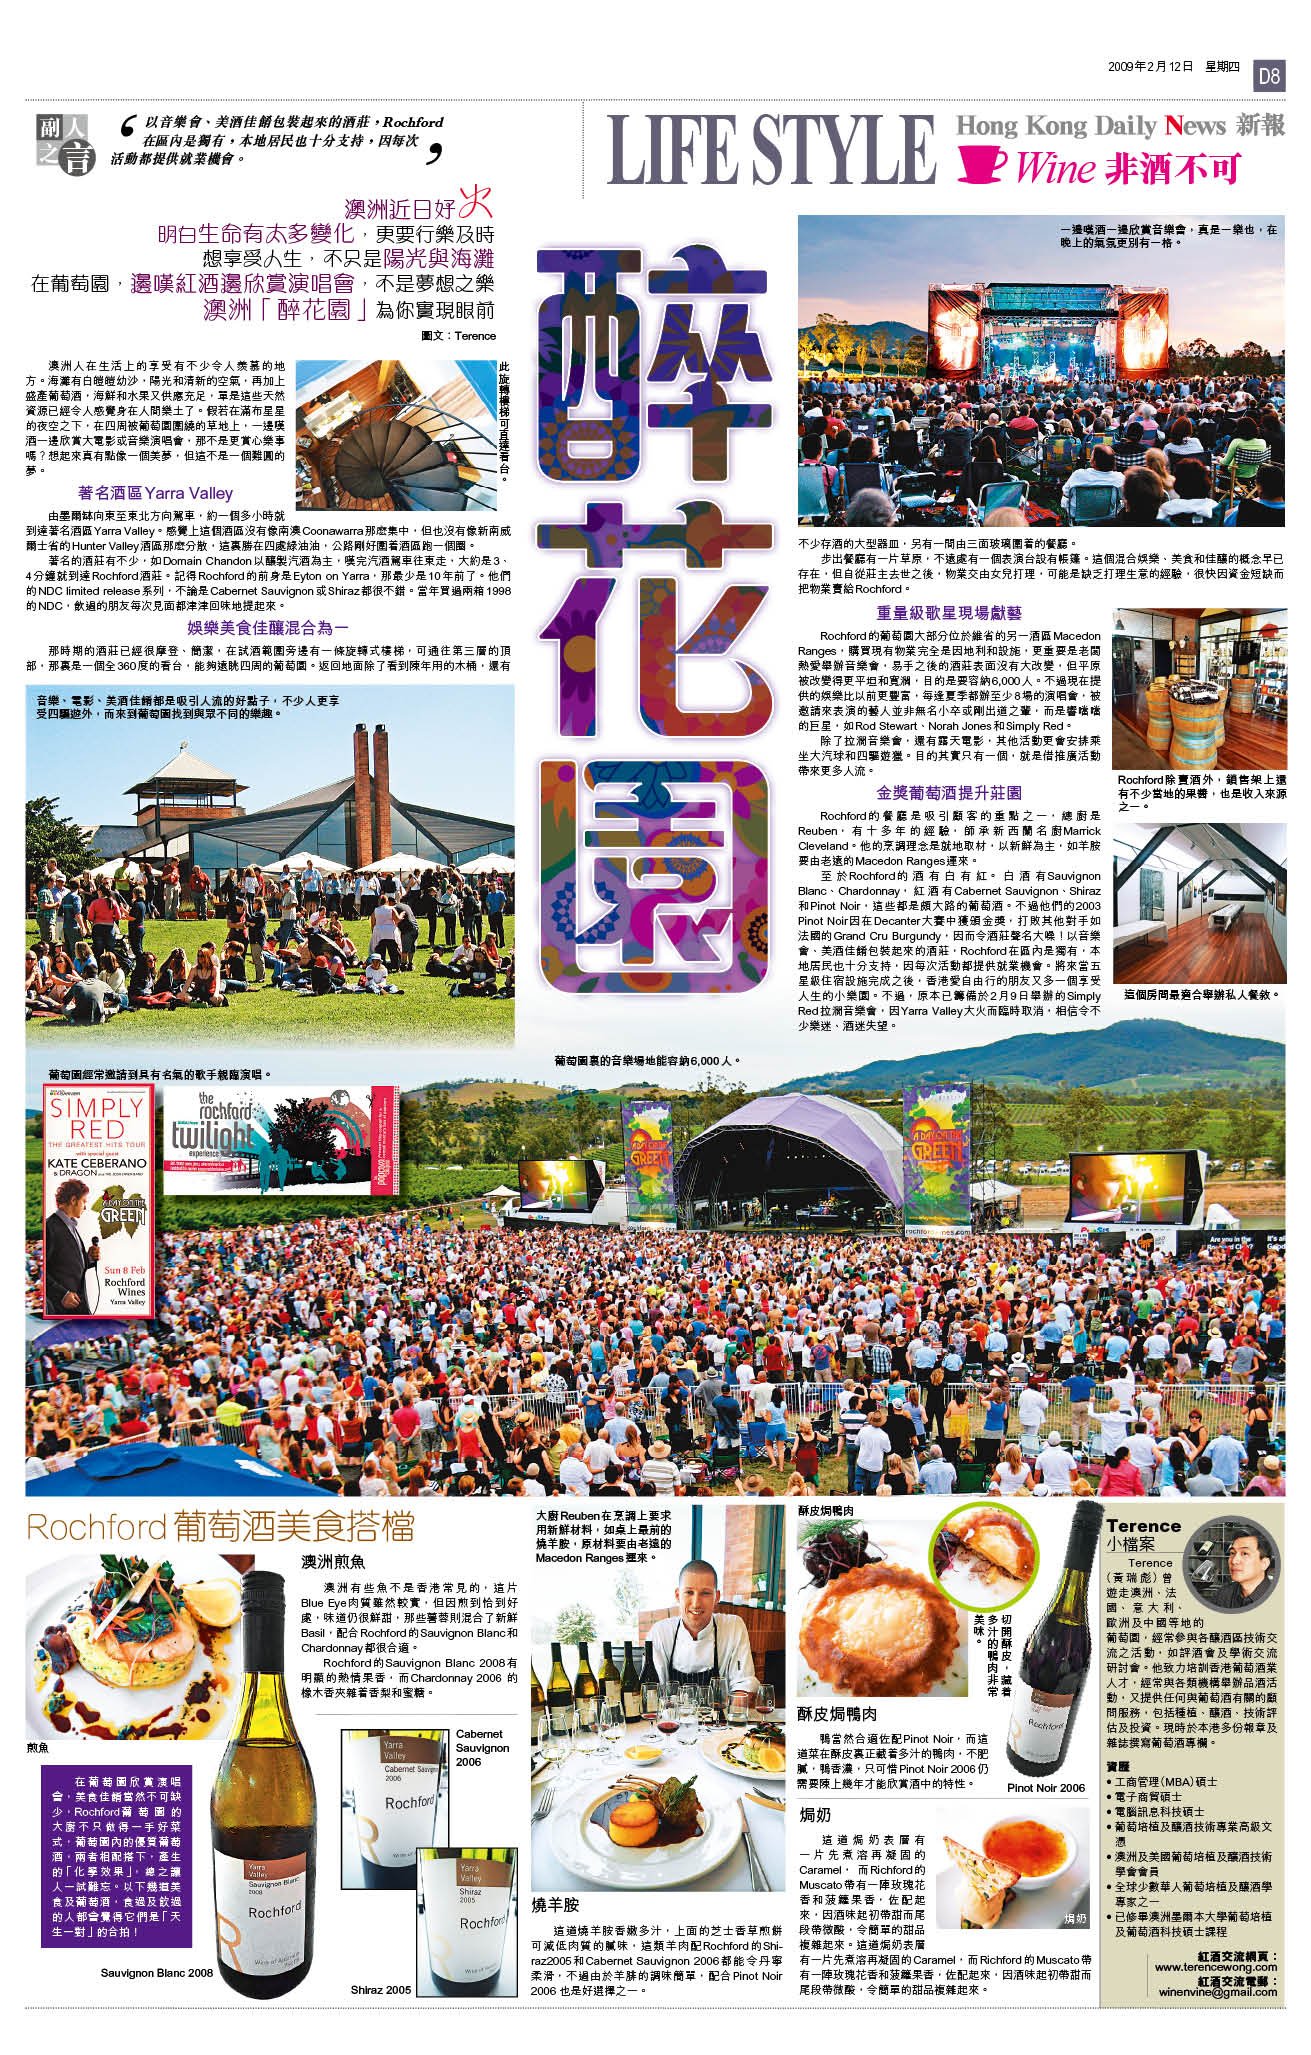 12th Feb 2009 HK Daily.jpg